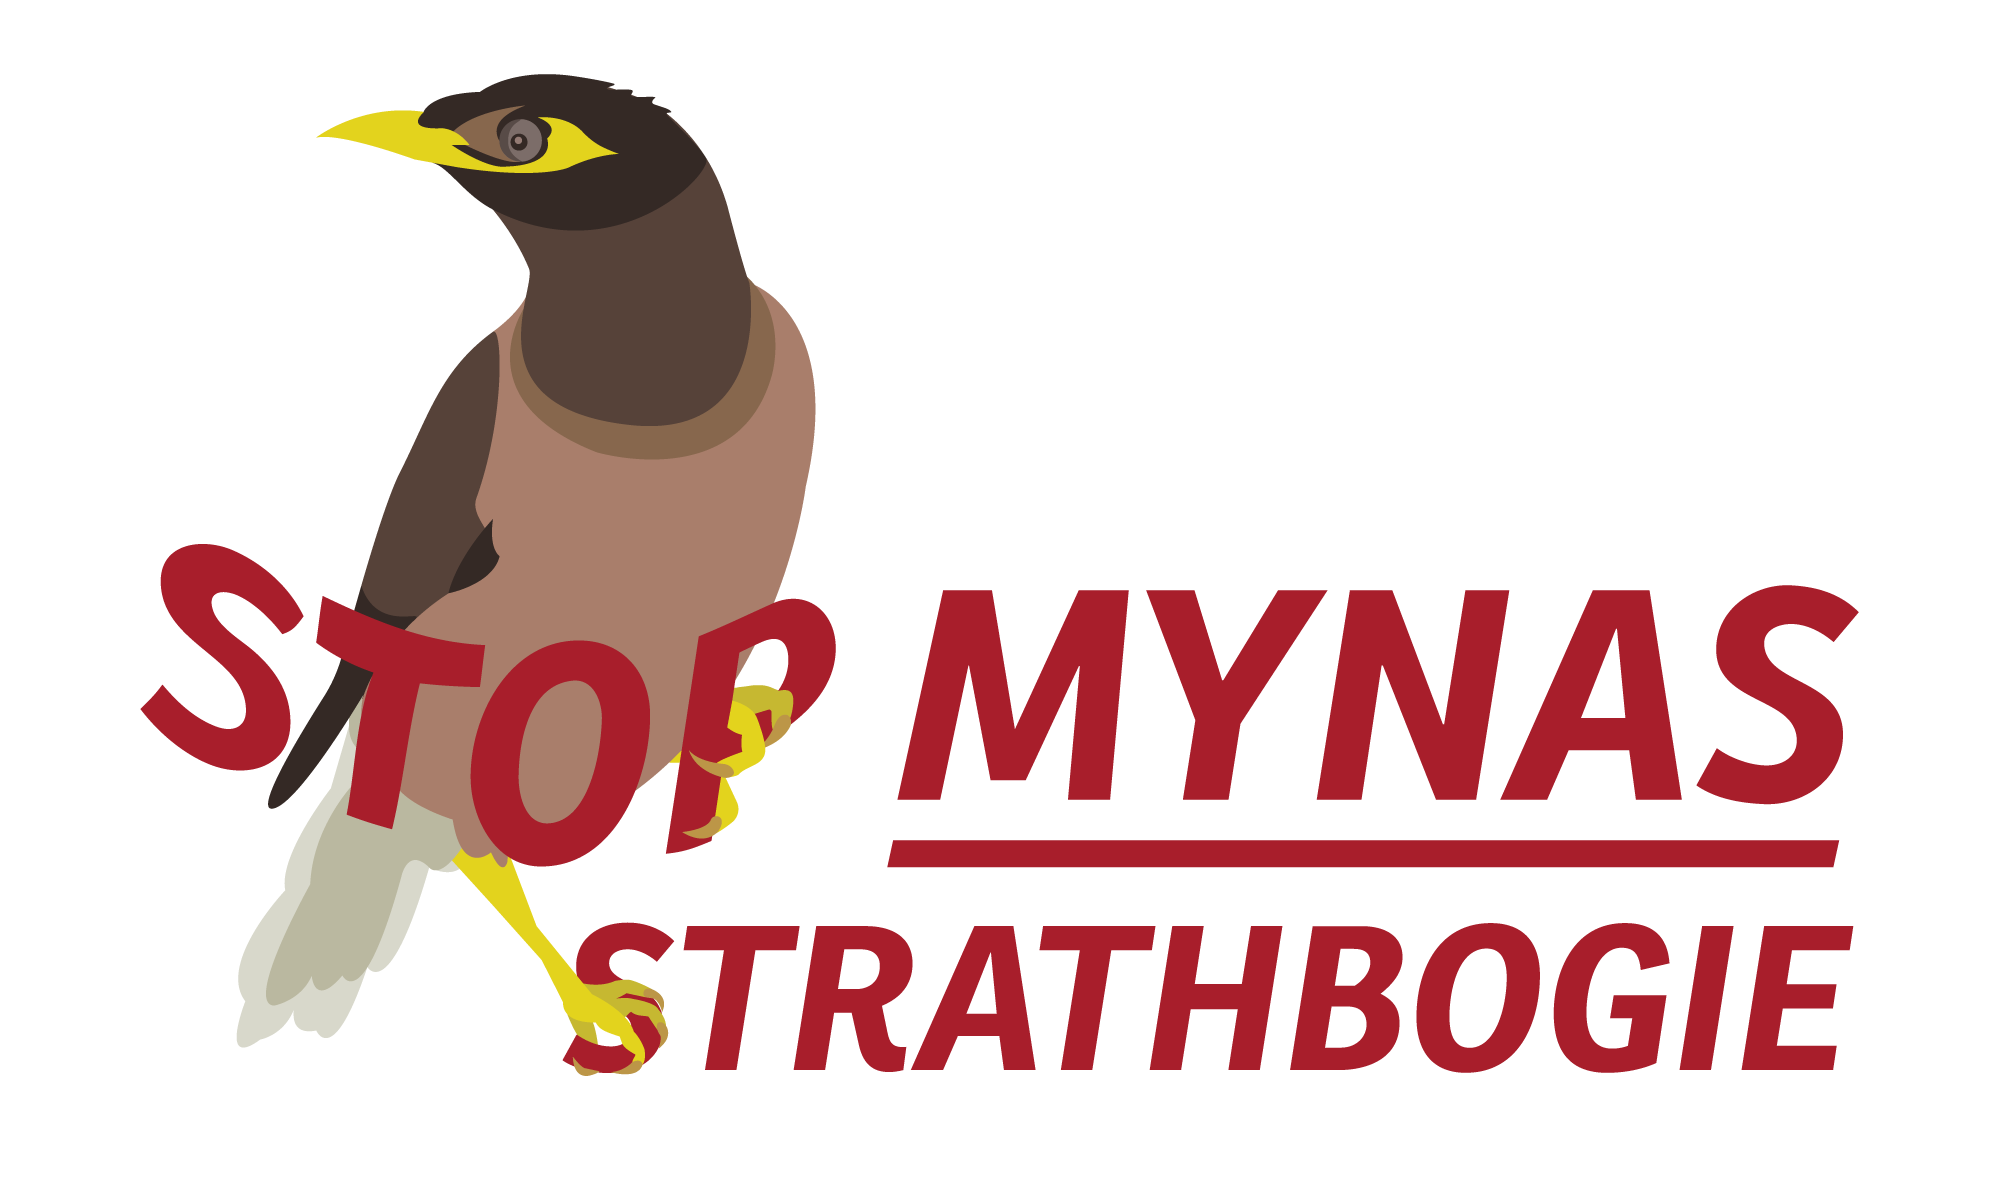 Stop Mynas Strathbogie